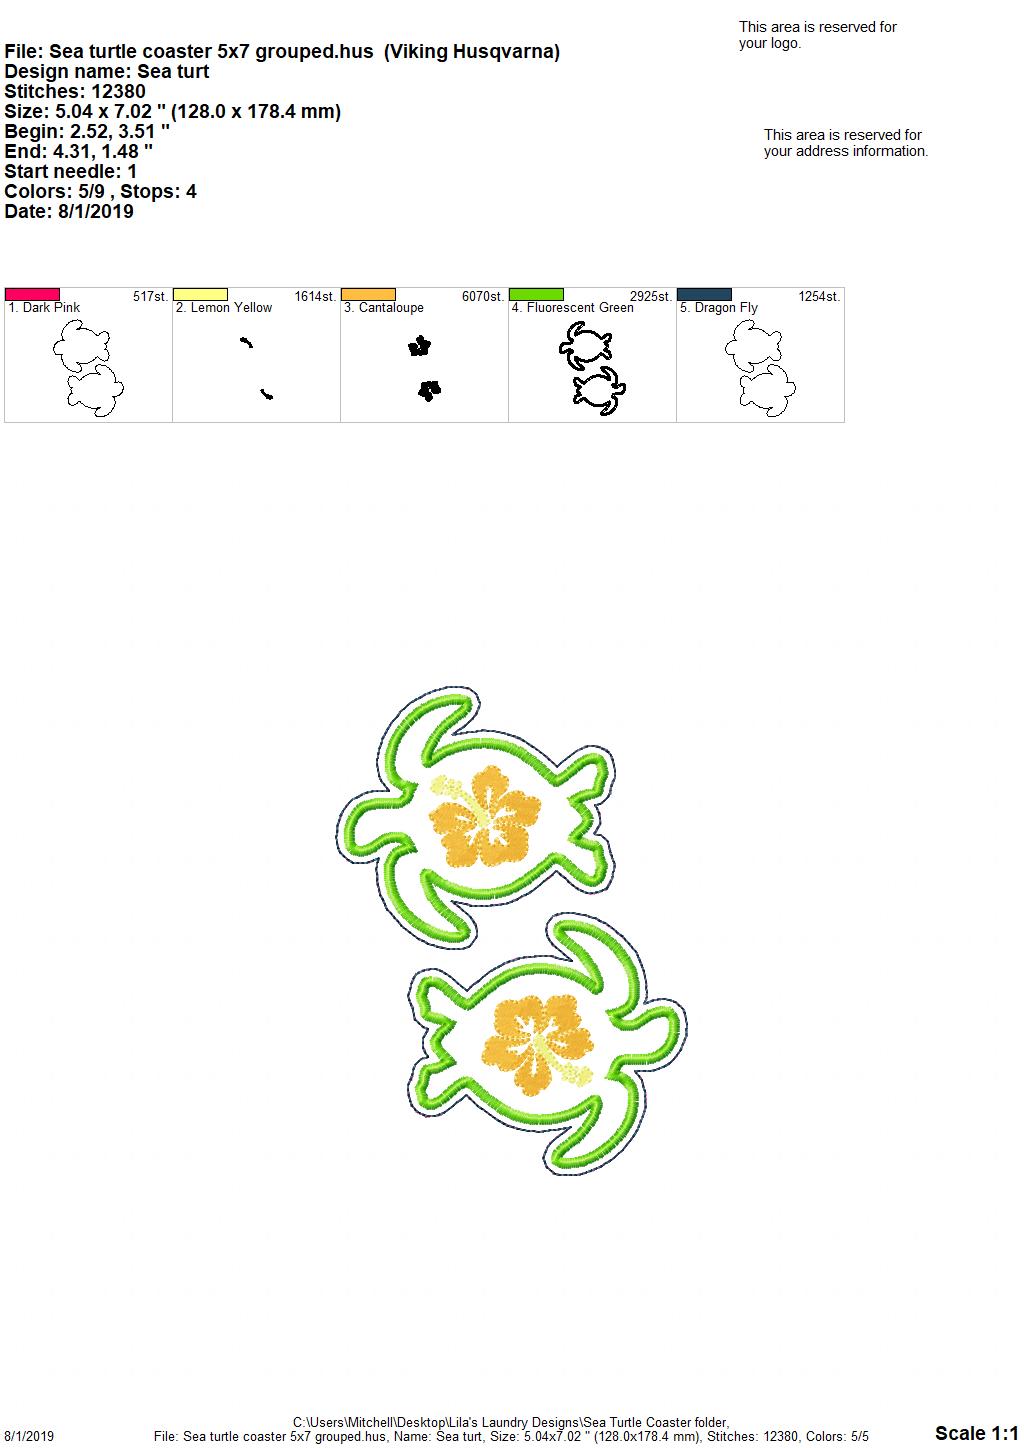 Sea Turtle Coaster 4x4 - DIGITAL Embroidery DESIGN